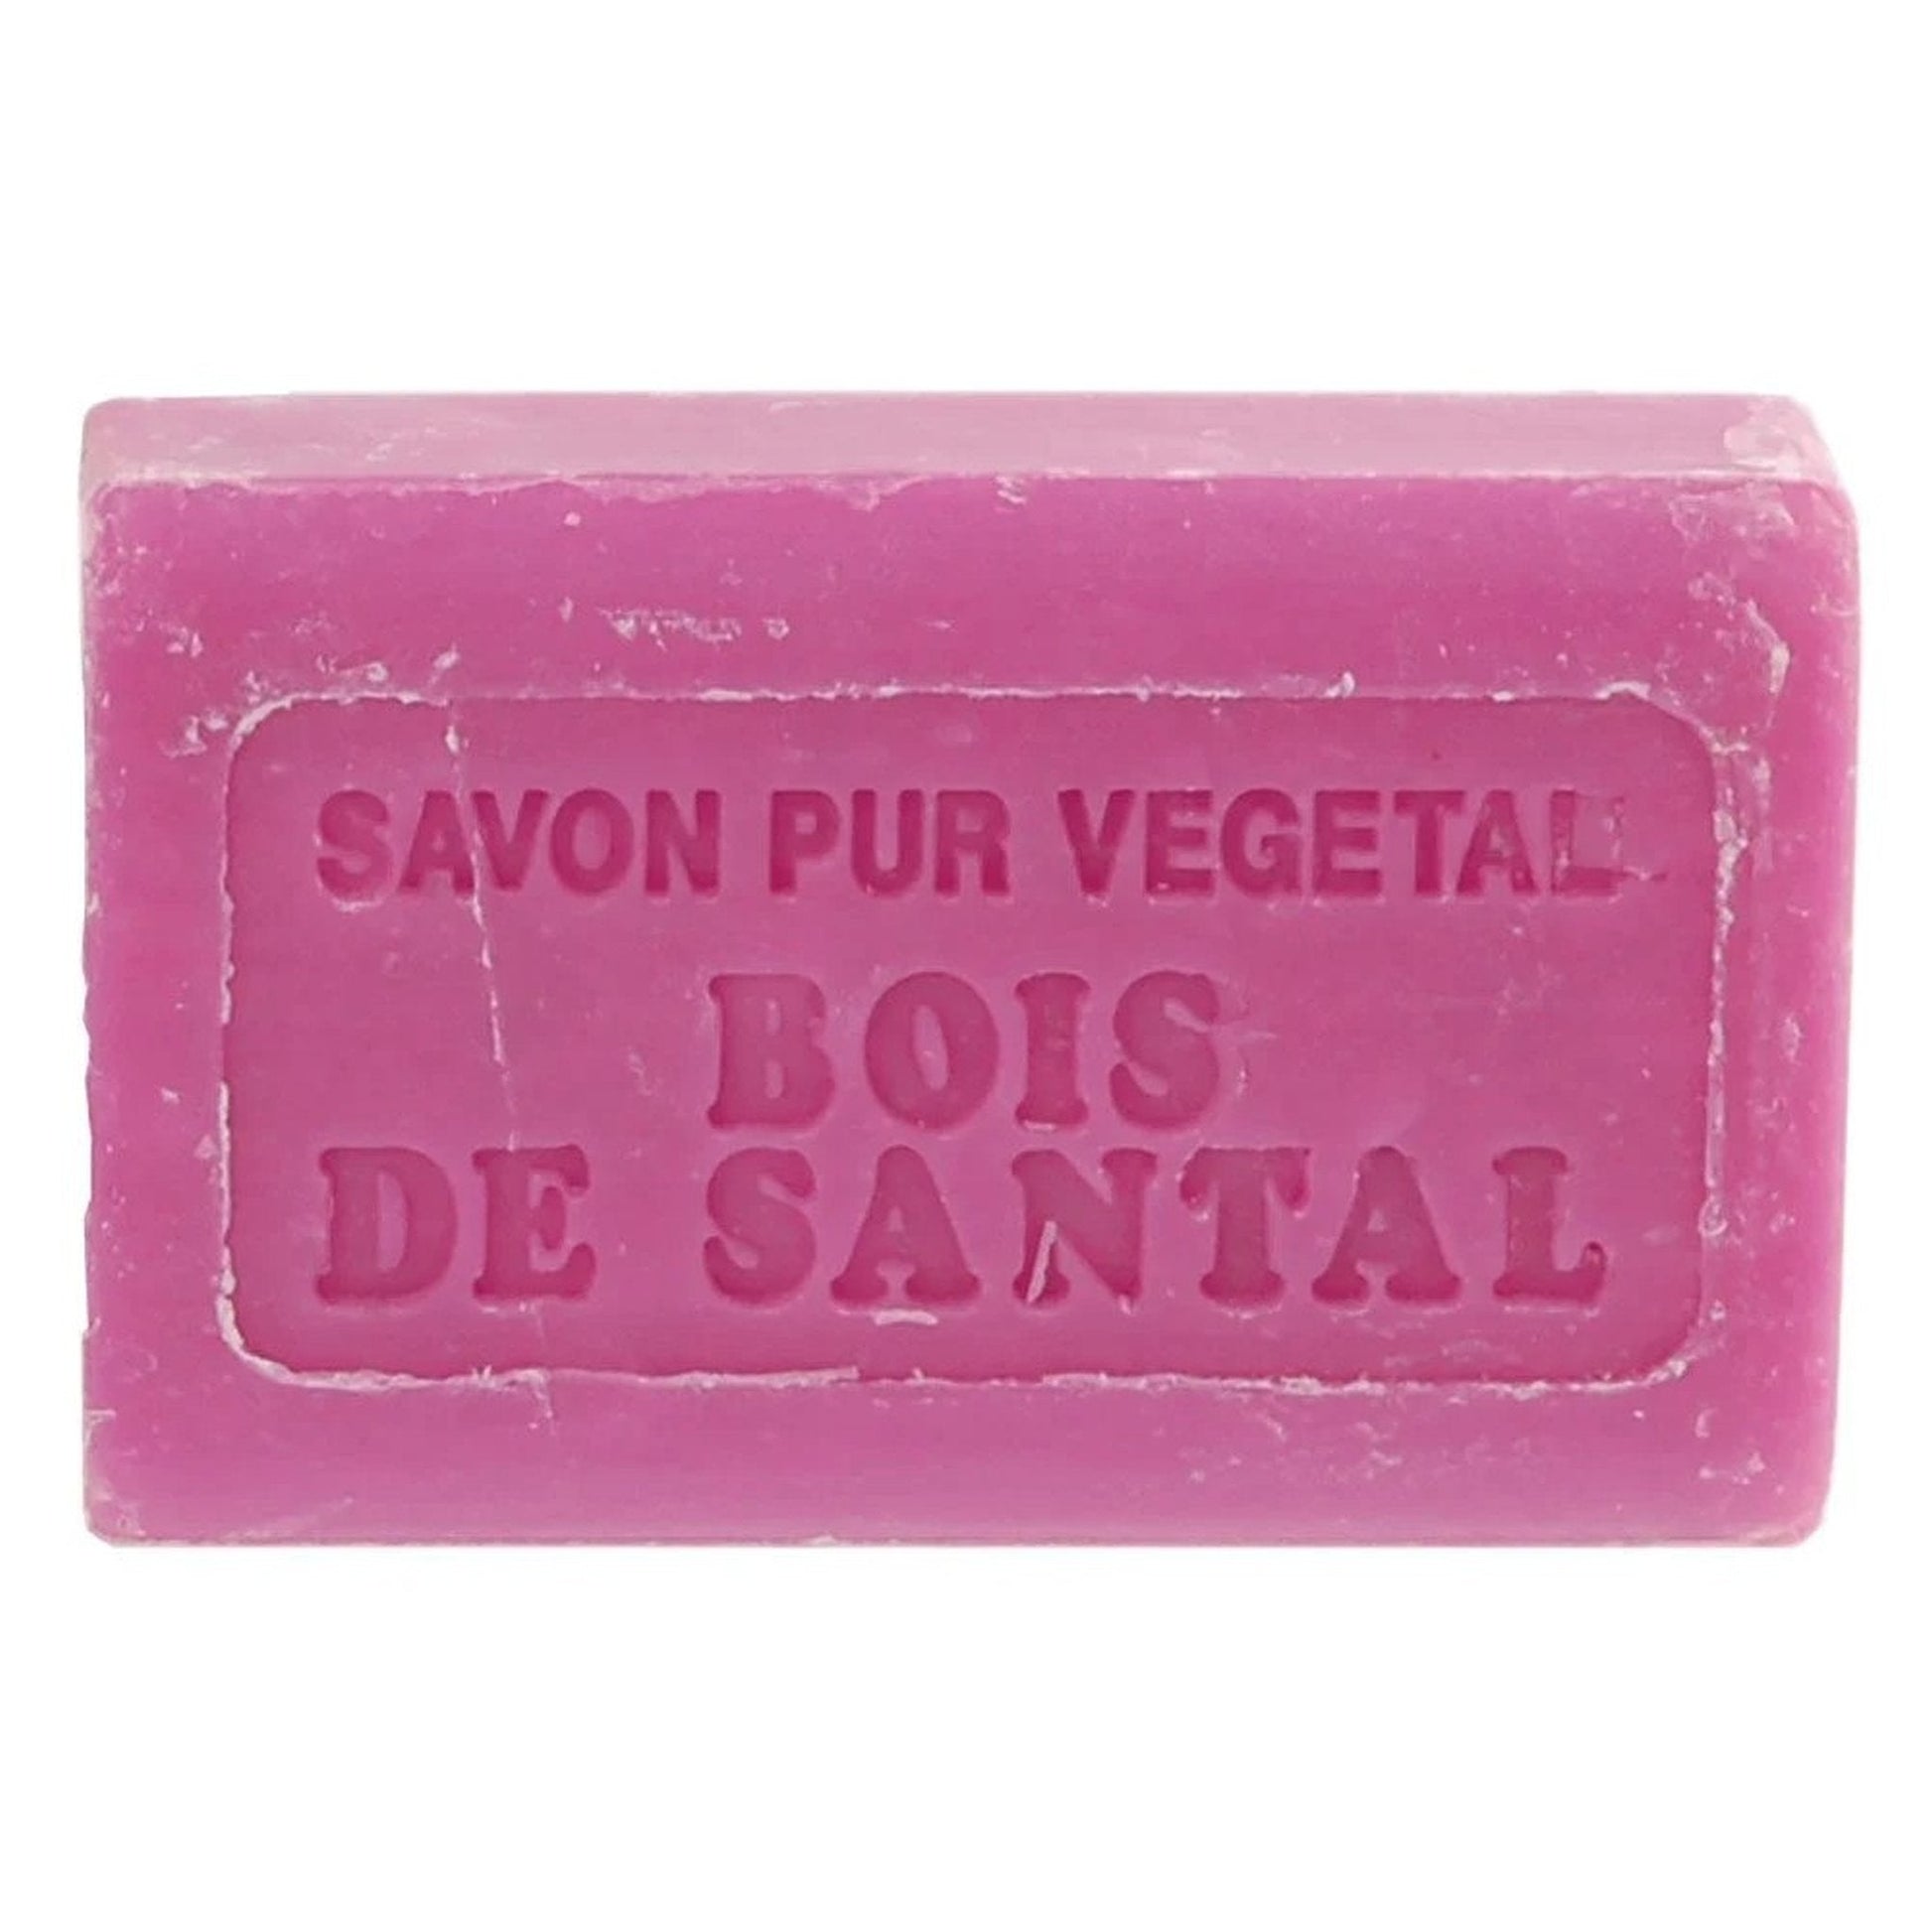 Marseilles Soap Santal 125g - Bumble Living